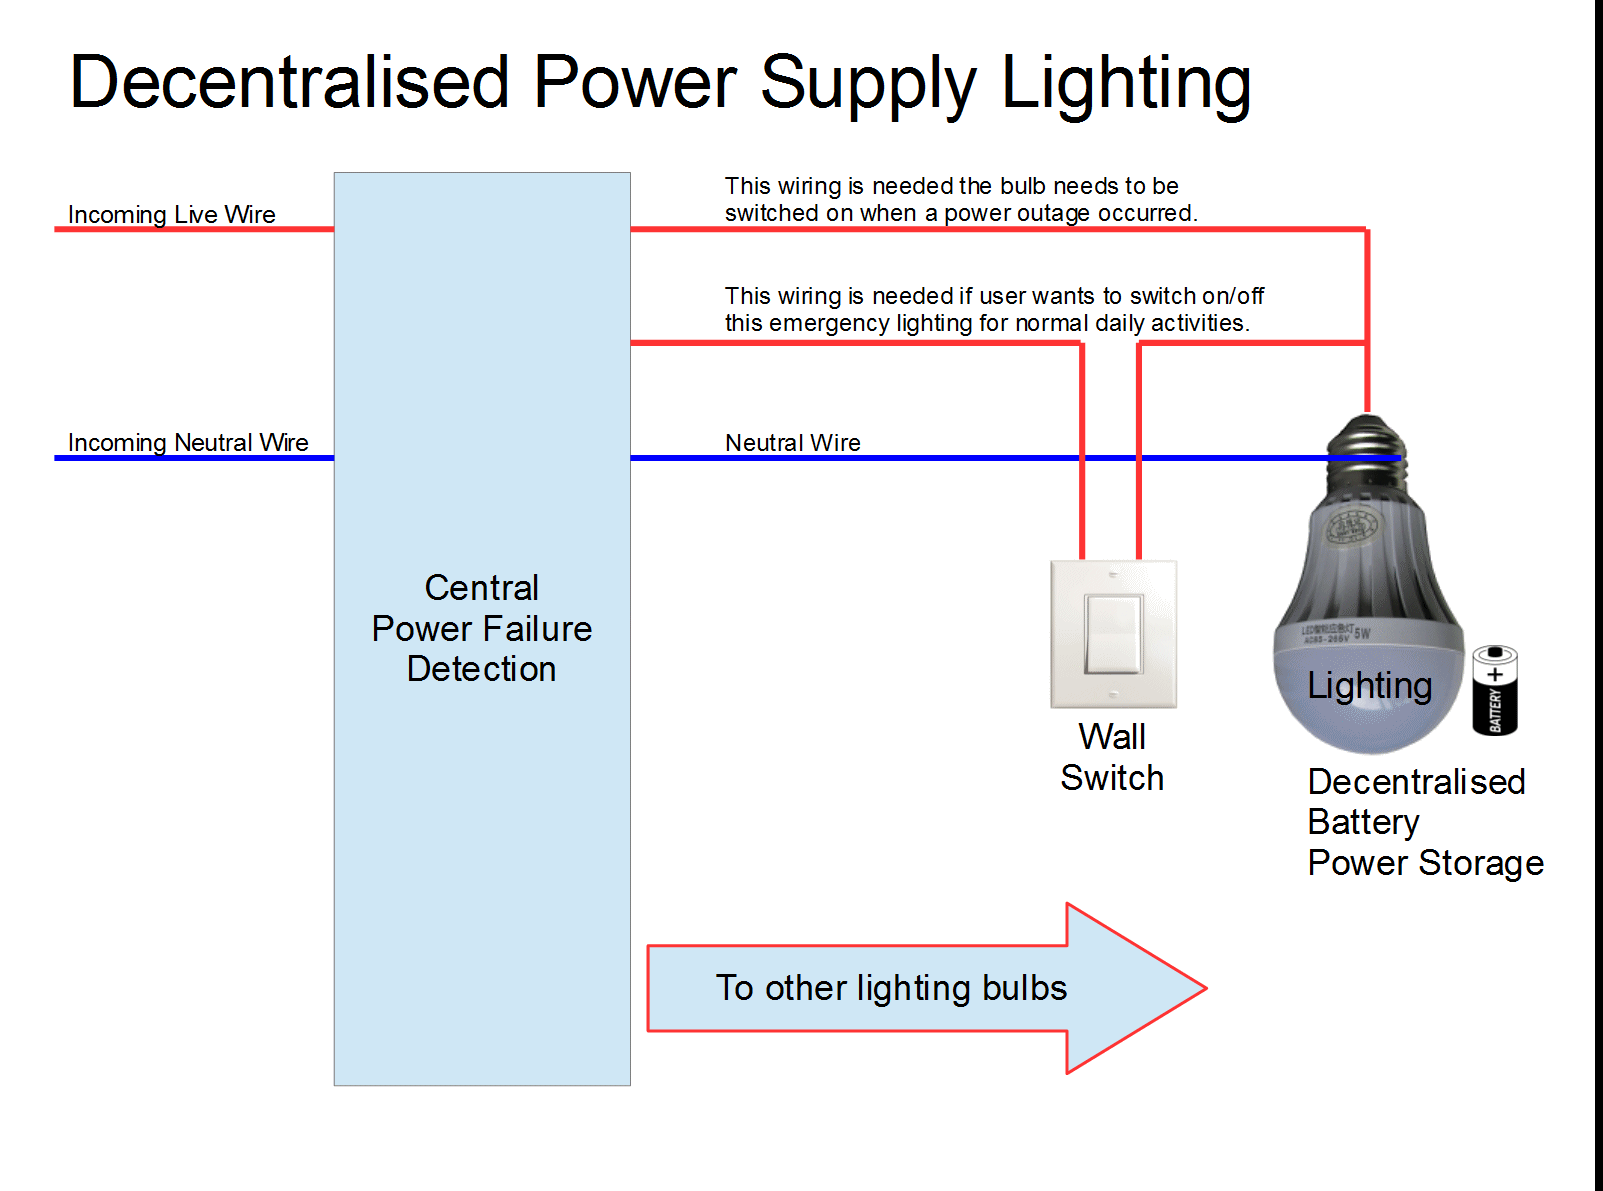 Decentralised Power Supply System for Emergency Lighting